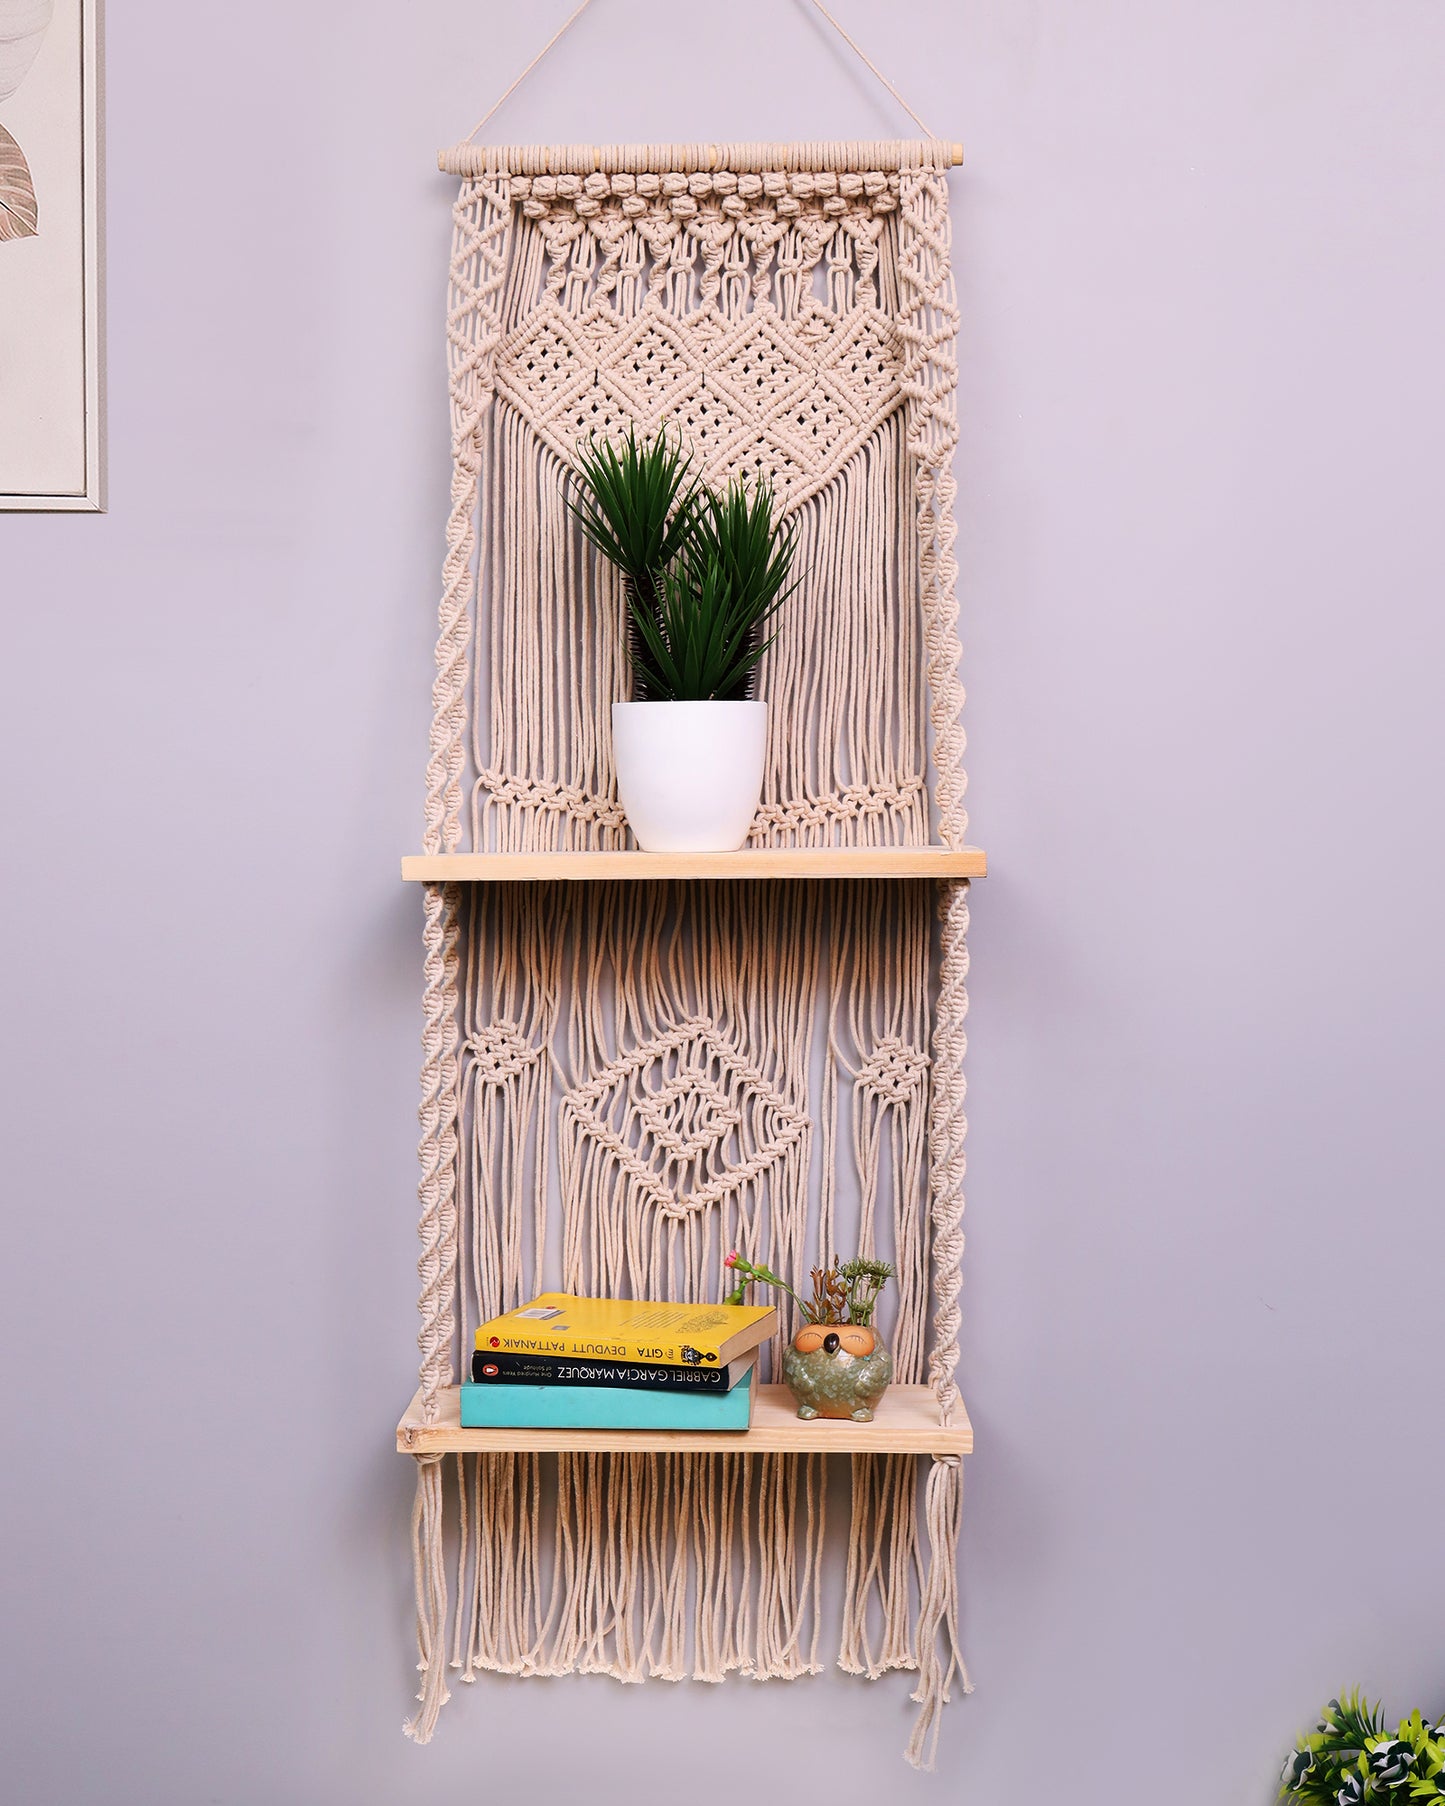 Macrame Wall Hanging Shelf, Boho Floating Shelf, Handcraft Bohemian Decor, Cute Woven Shelves for Bathroom Plants Picture Frame, Home Storage